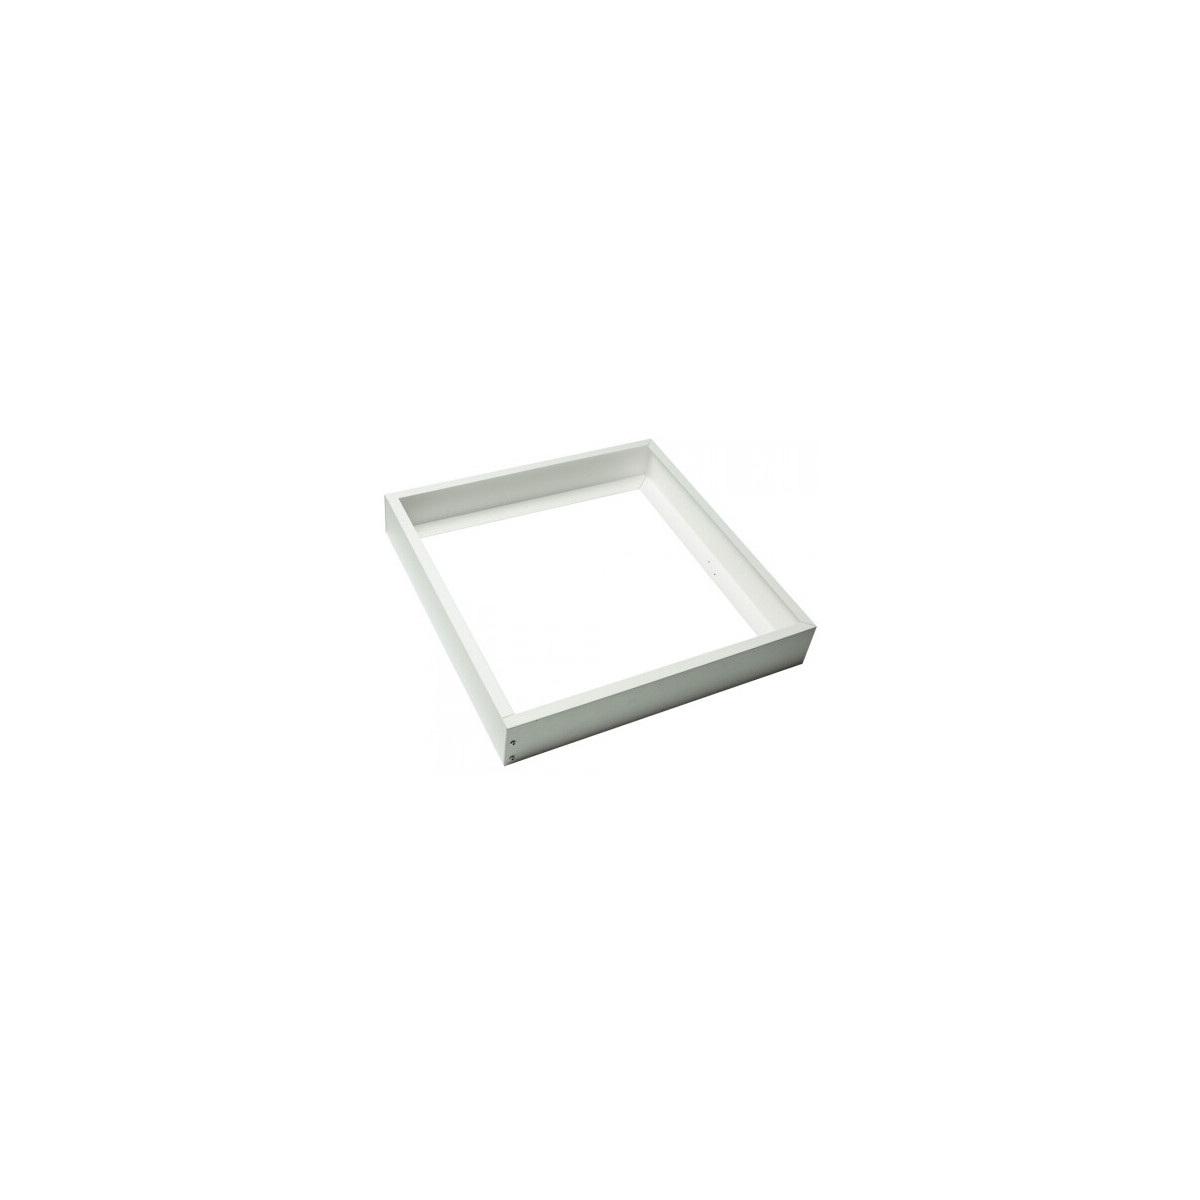 Blanco Marco de aluminio 60x80cm - Calidad superior - ArtPhotoLimited